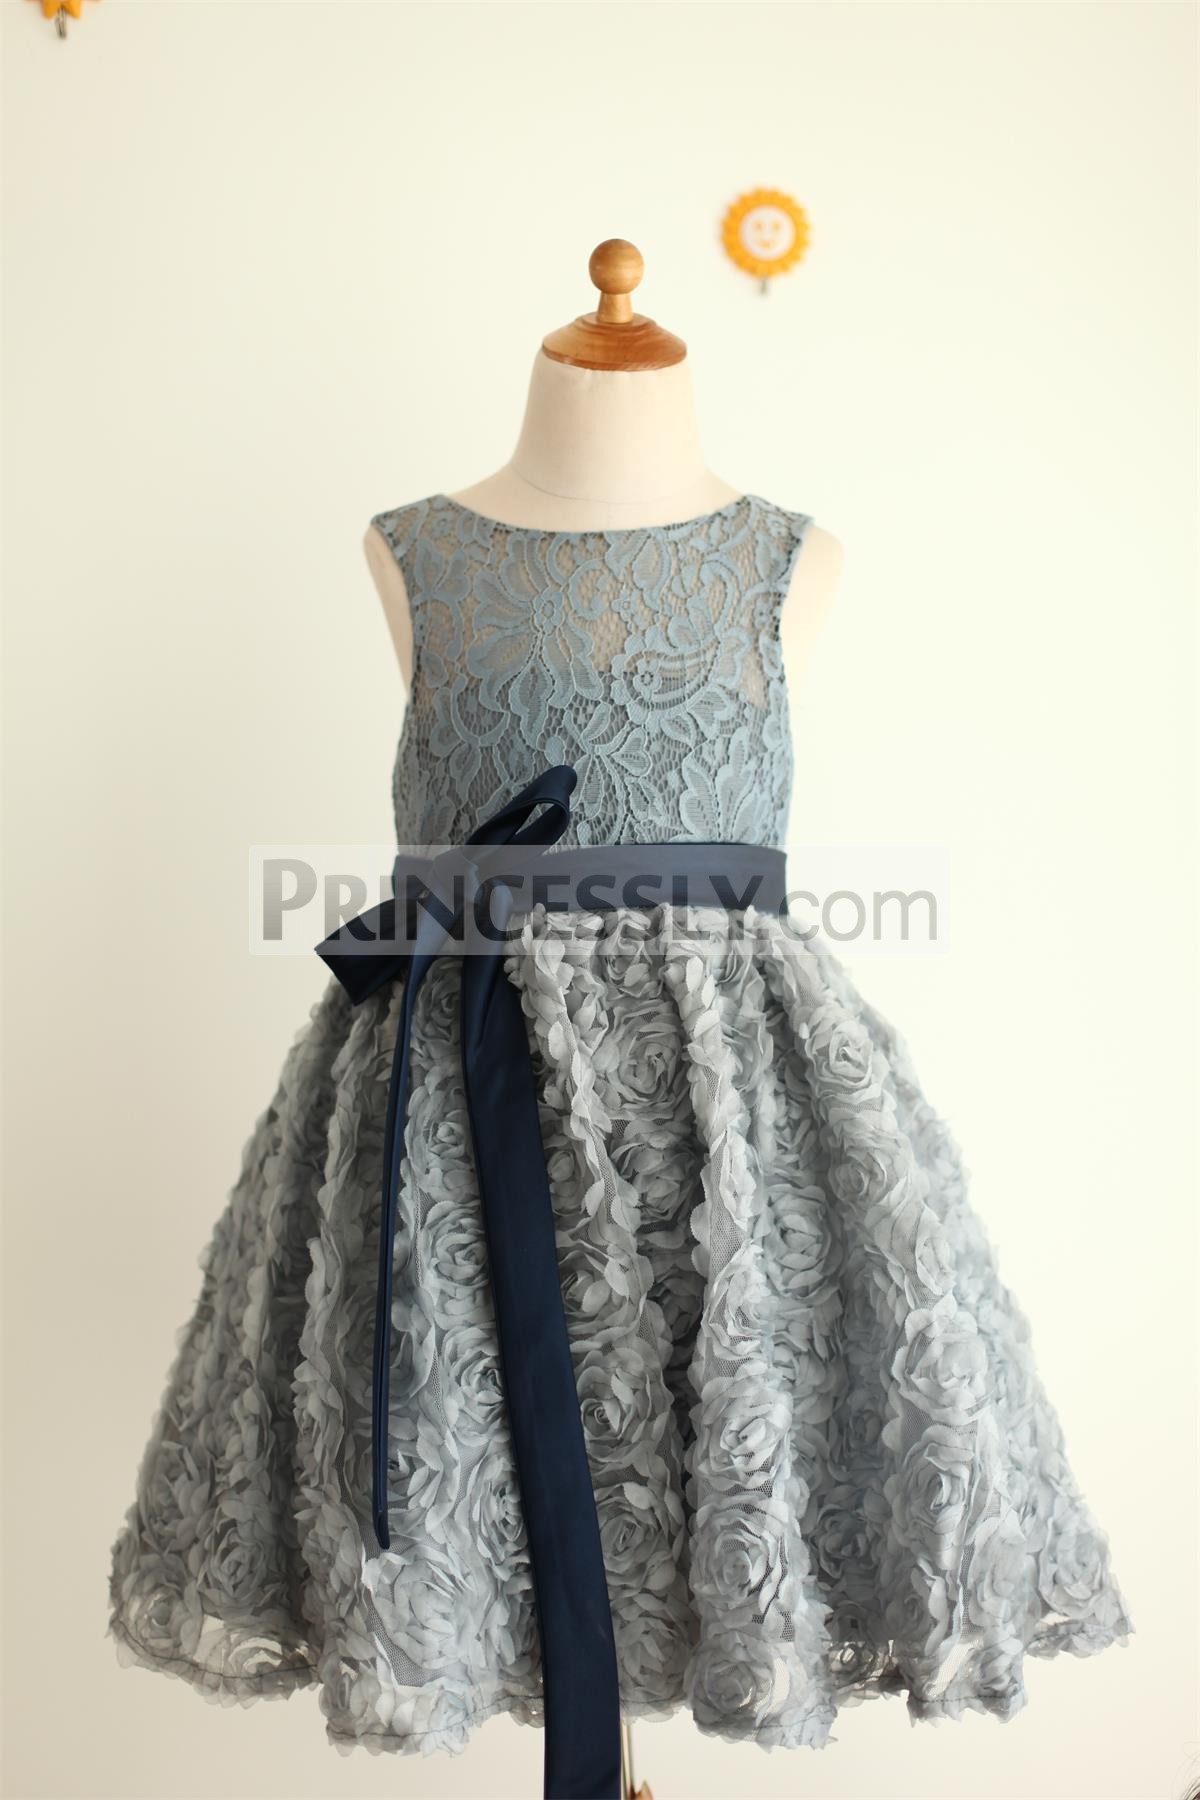 Princessly.com-K1000041-Gray Lace Rosette Keyhole Back Flower Girl Dress-31